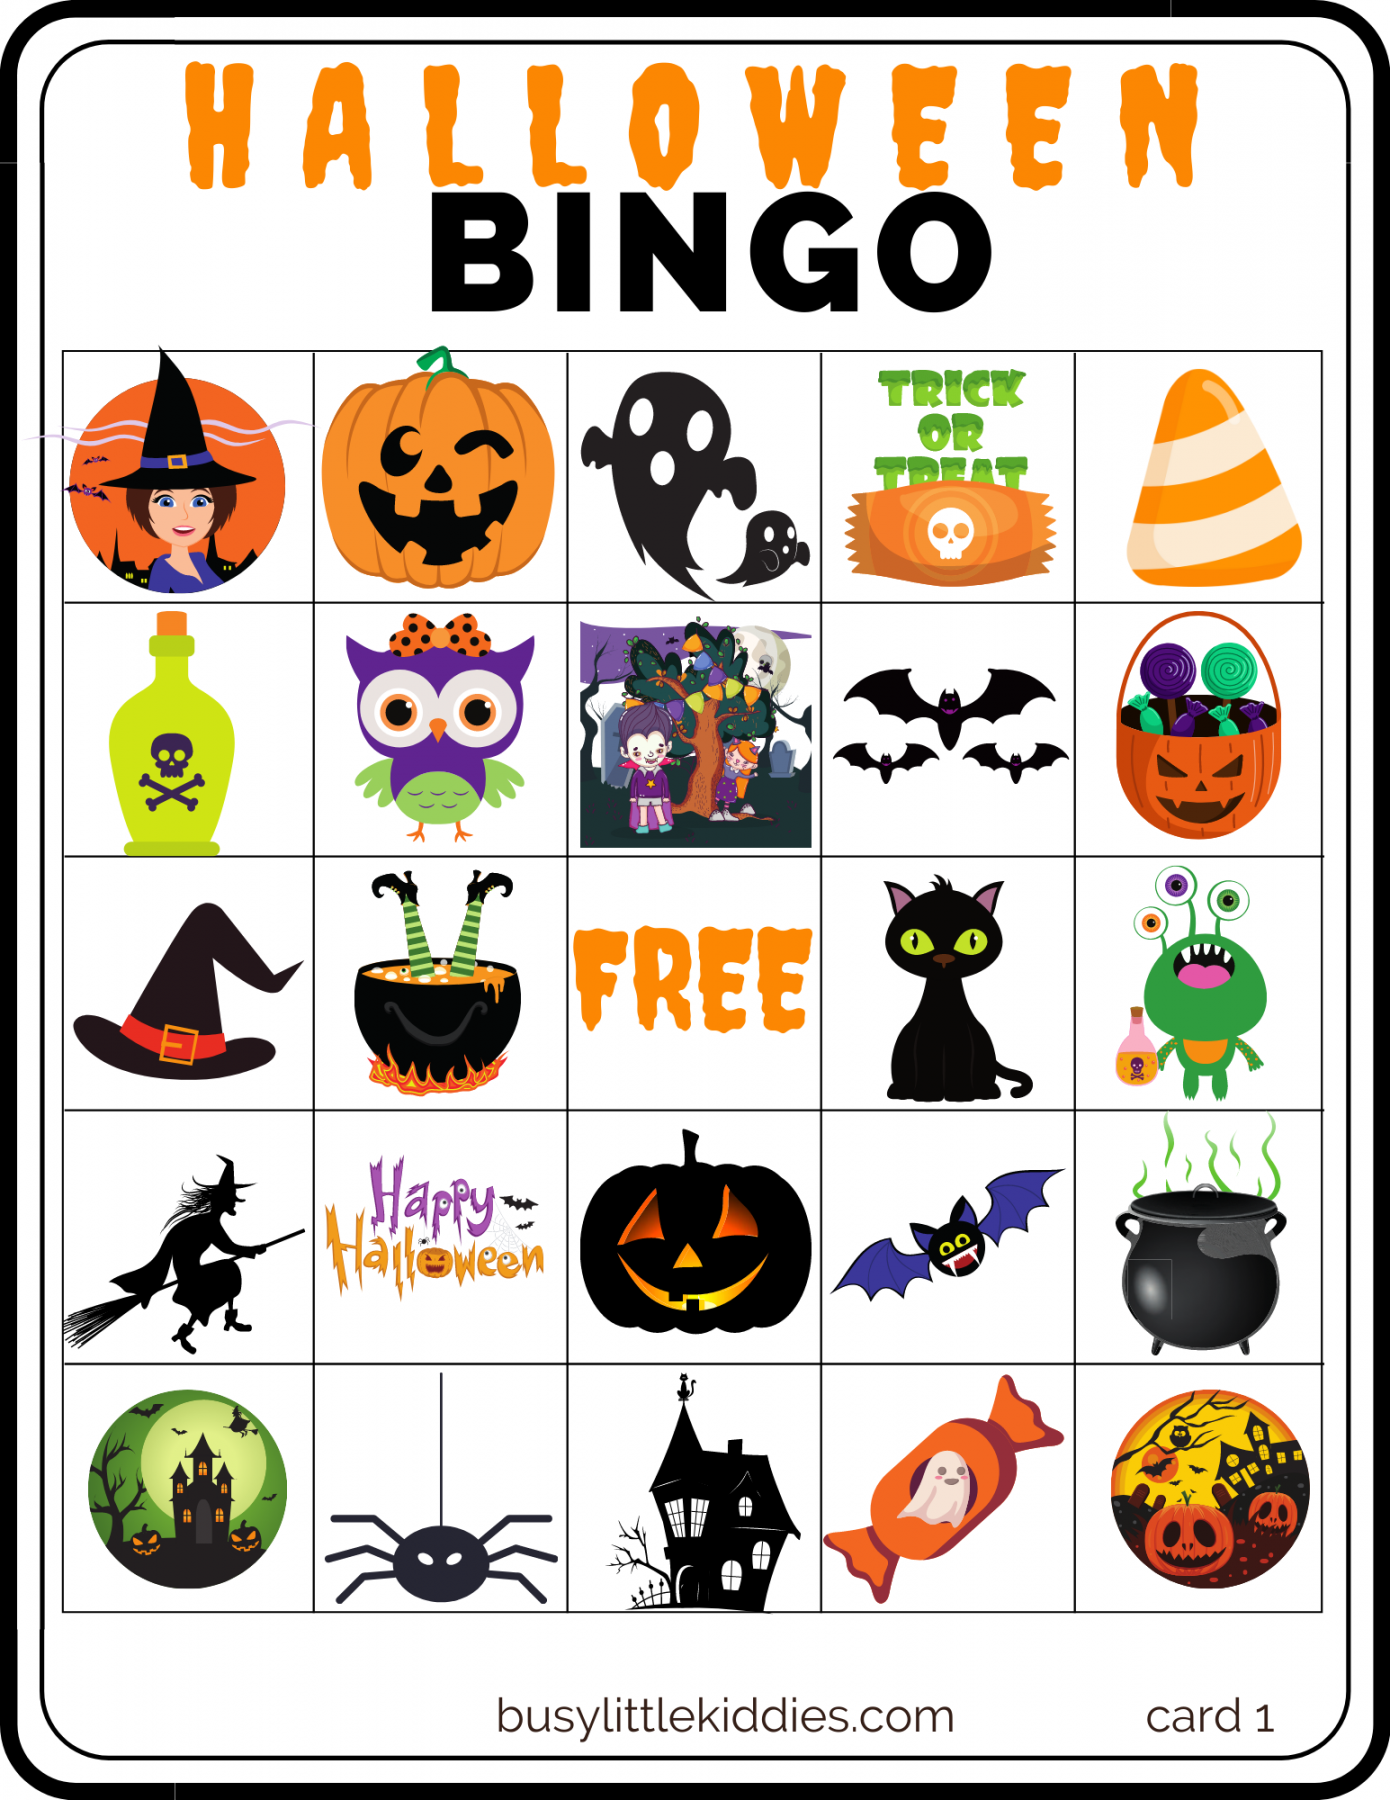 Free Printable Halloween Images - Printable - Halloween Bingo Free Printable with Pictures  players - Busy